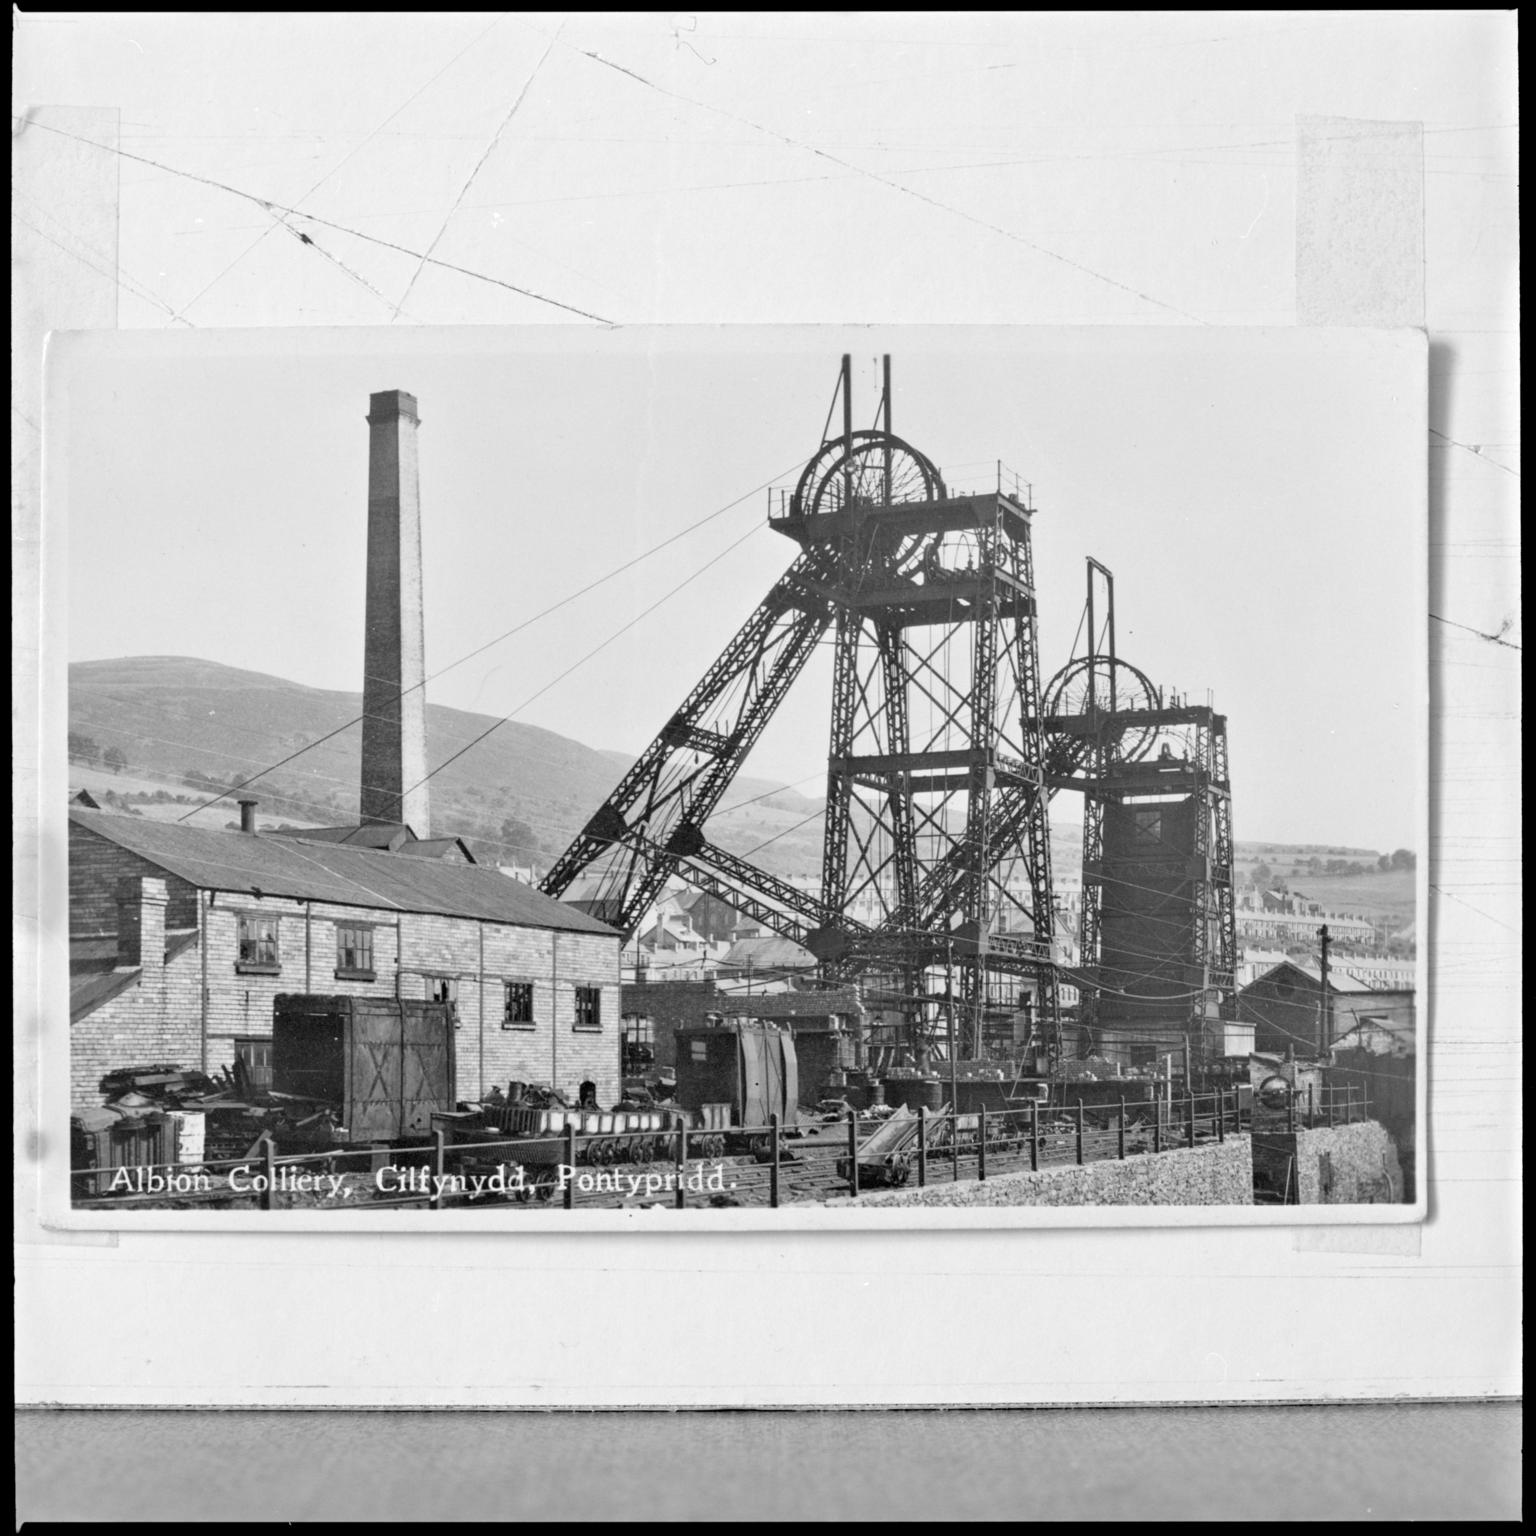 Albion Colliery, film negative